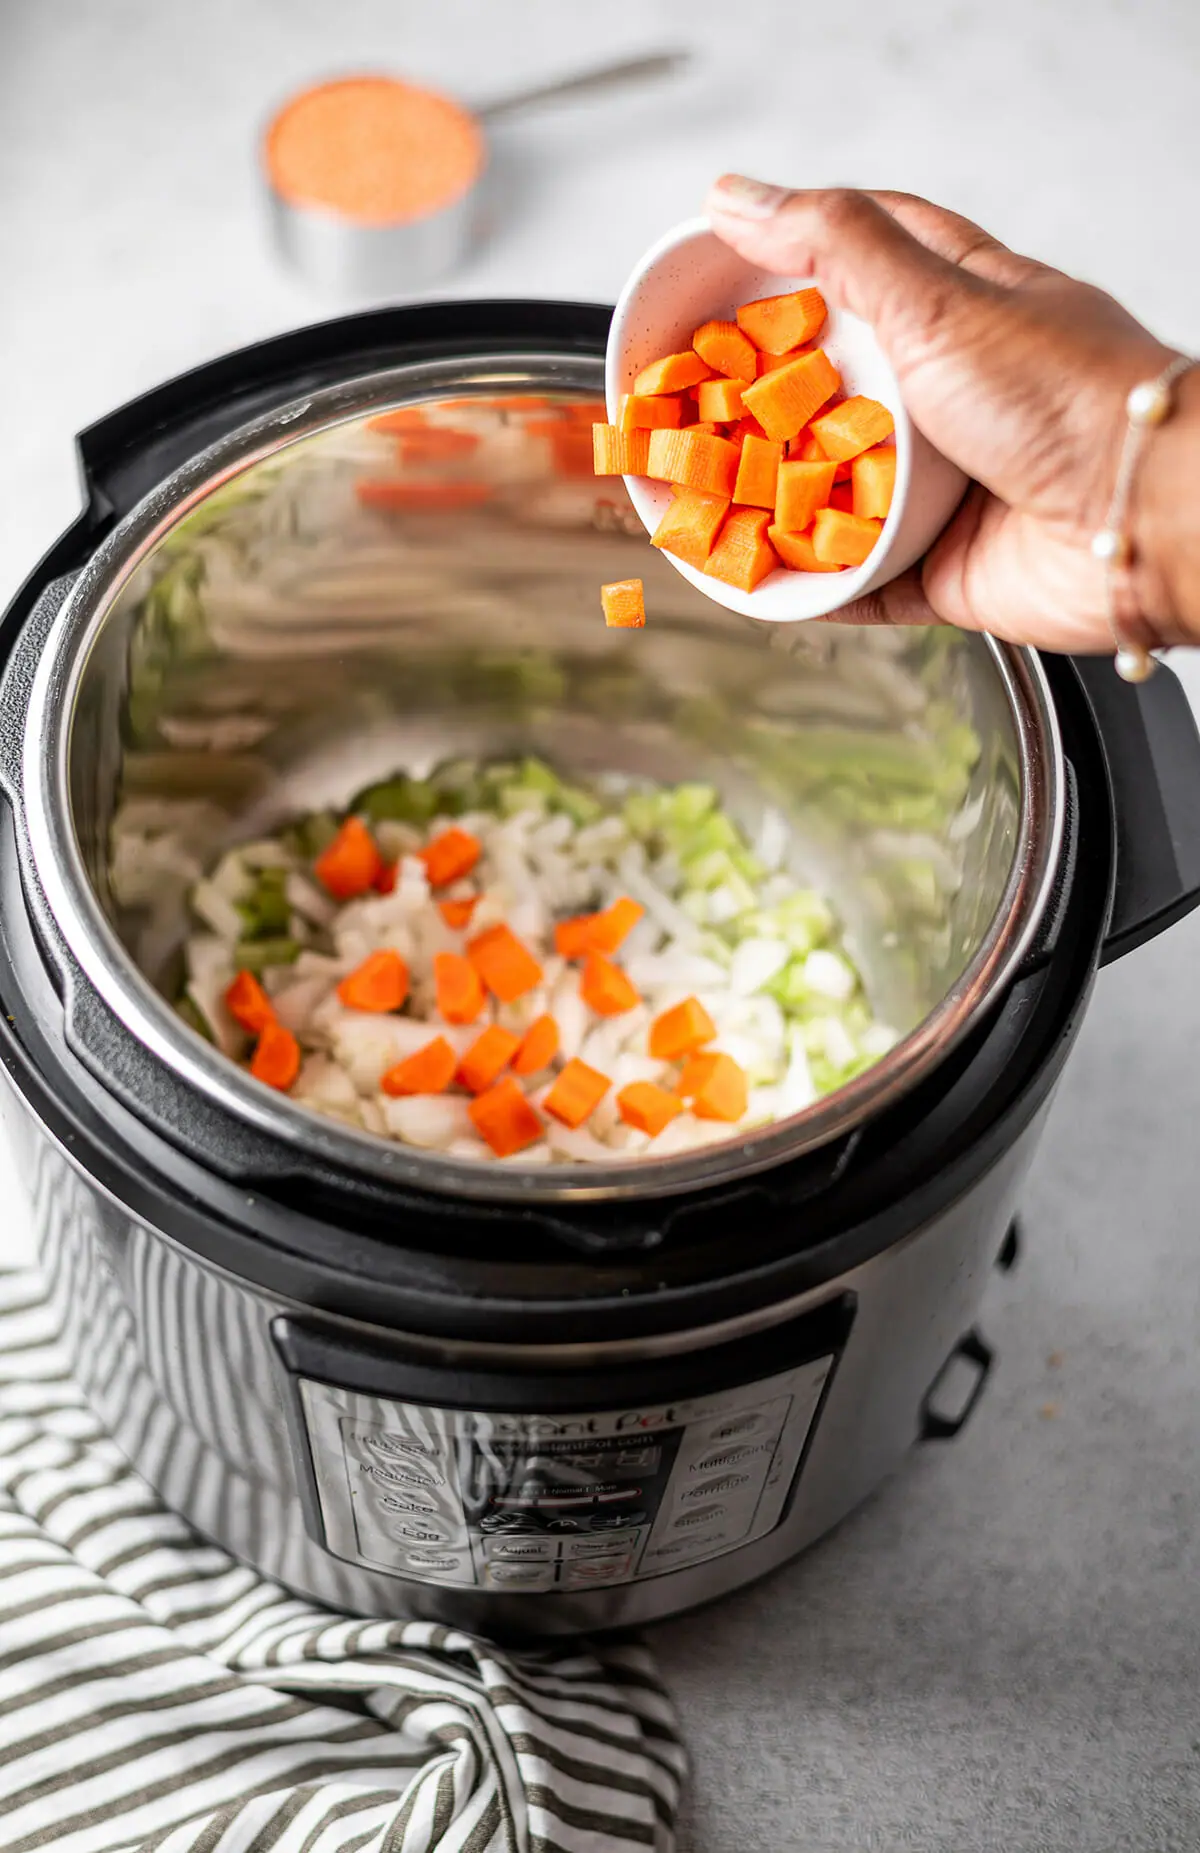 Making red lentil soup in an Instant Pot pressure cooker.